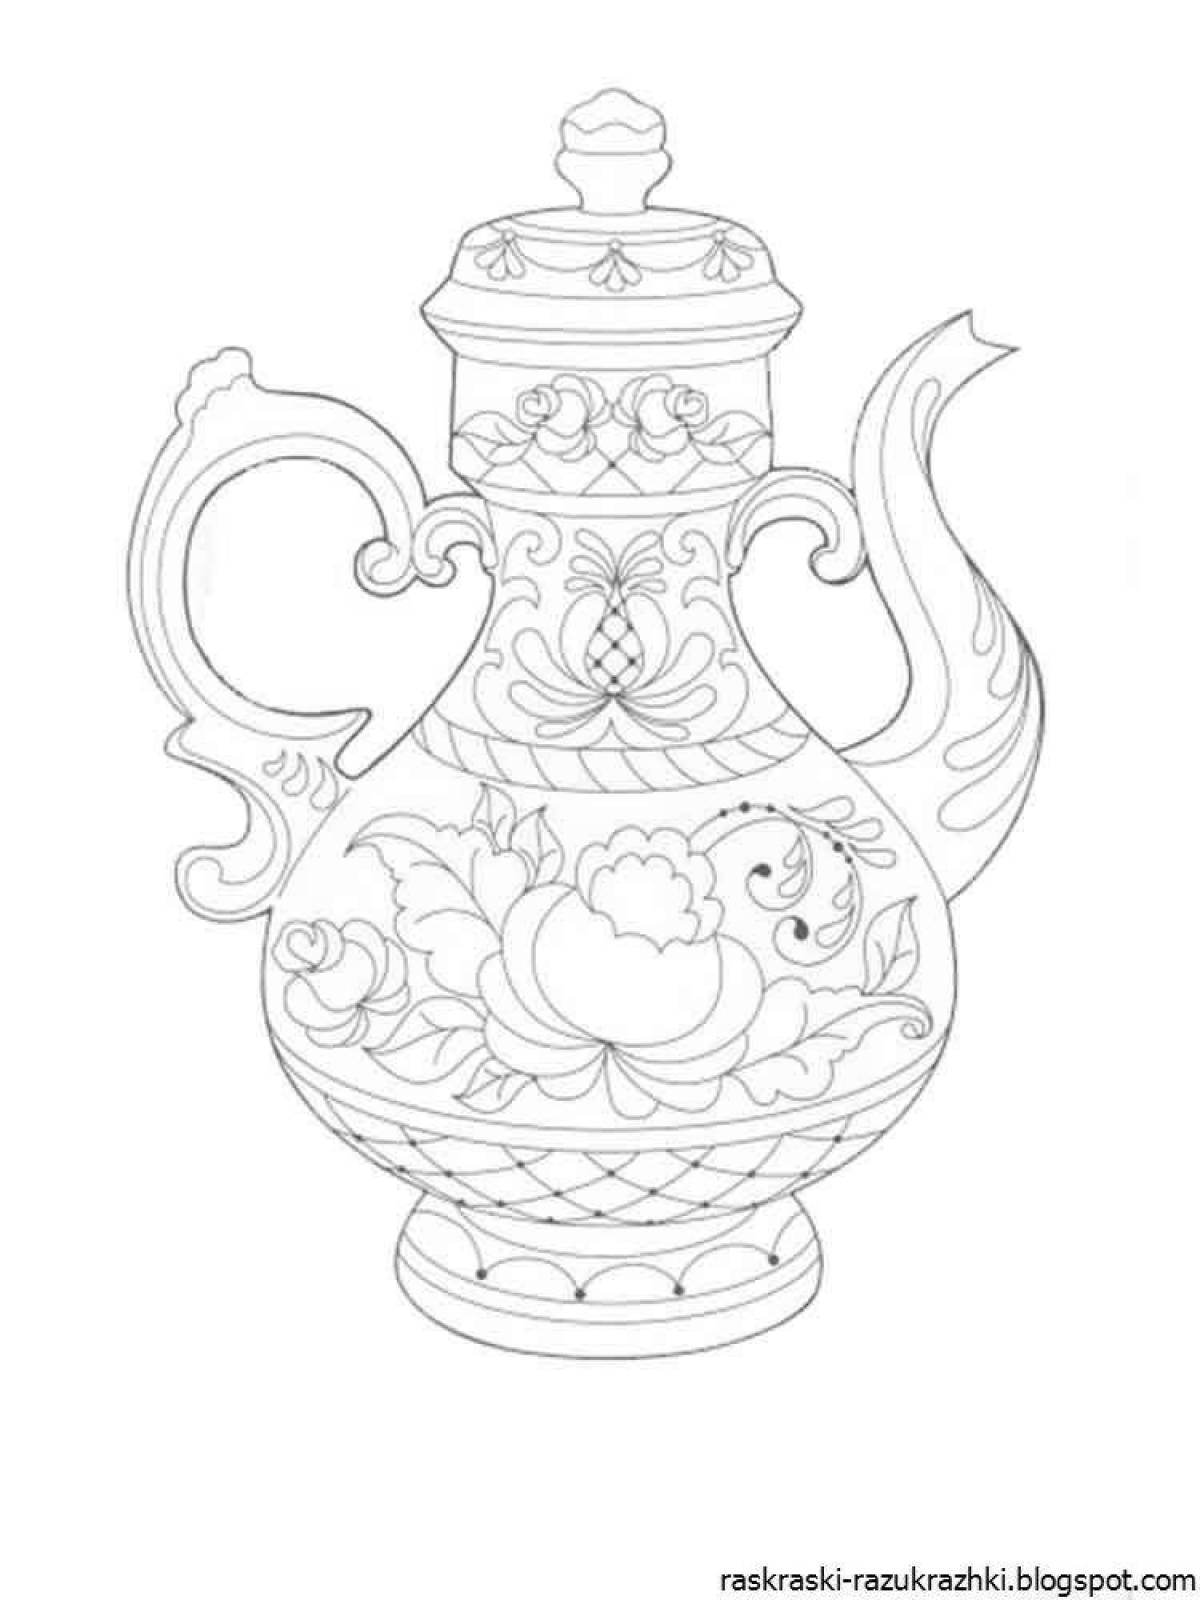 Coloring cute teapot gzhel